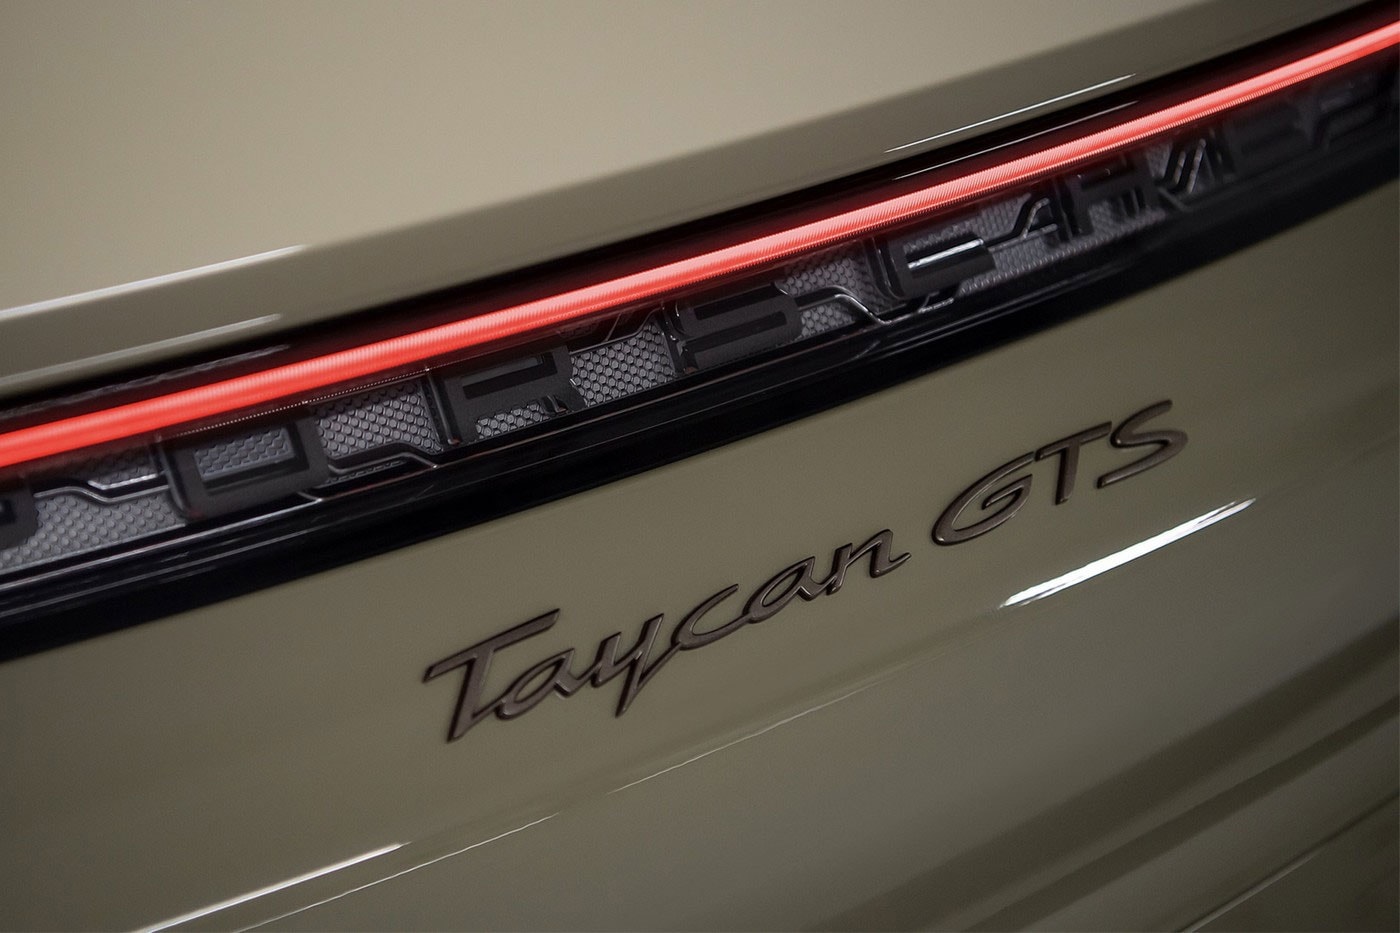 Porsche Taycan GTS Hockenheimring Celebrates the 90th Anniversary of the Track german ev electric vehicle stone grey